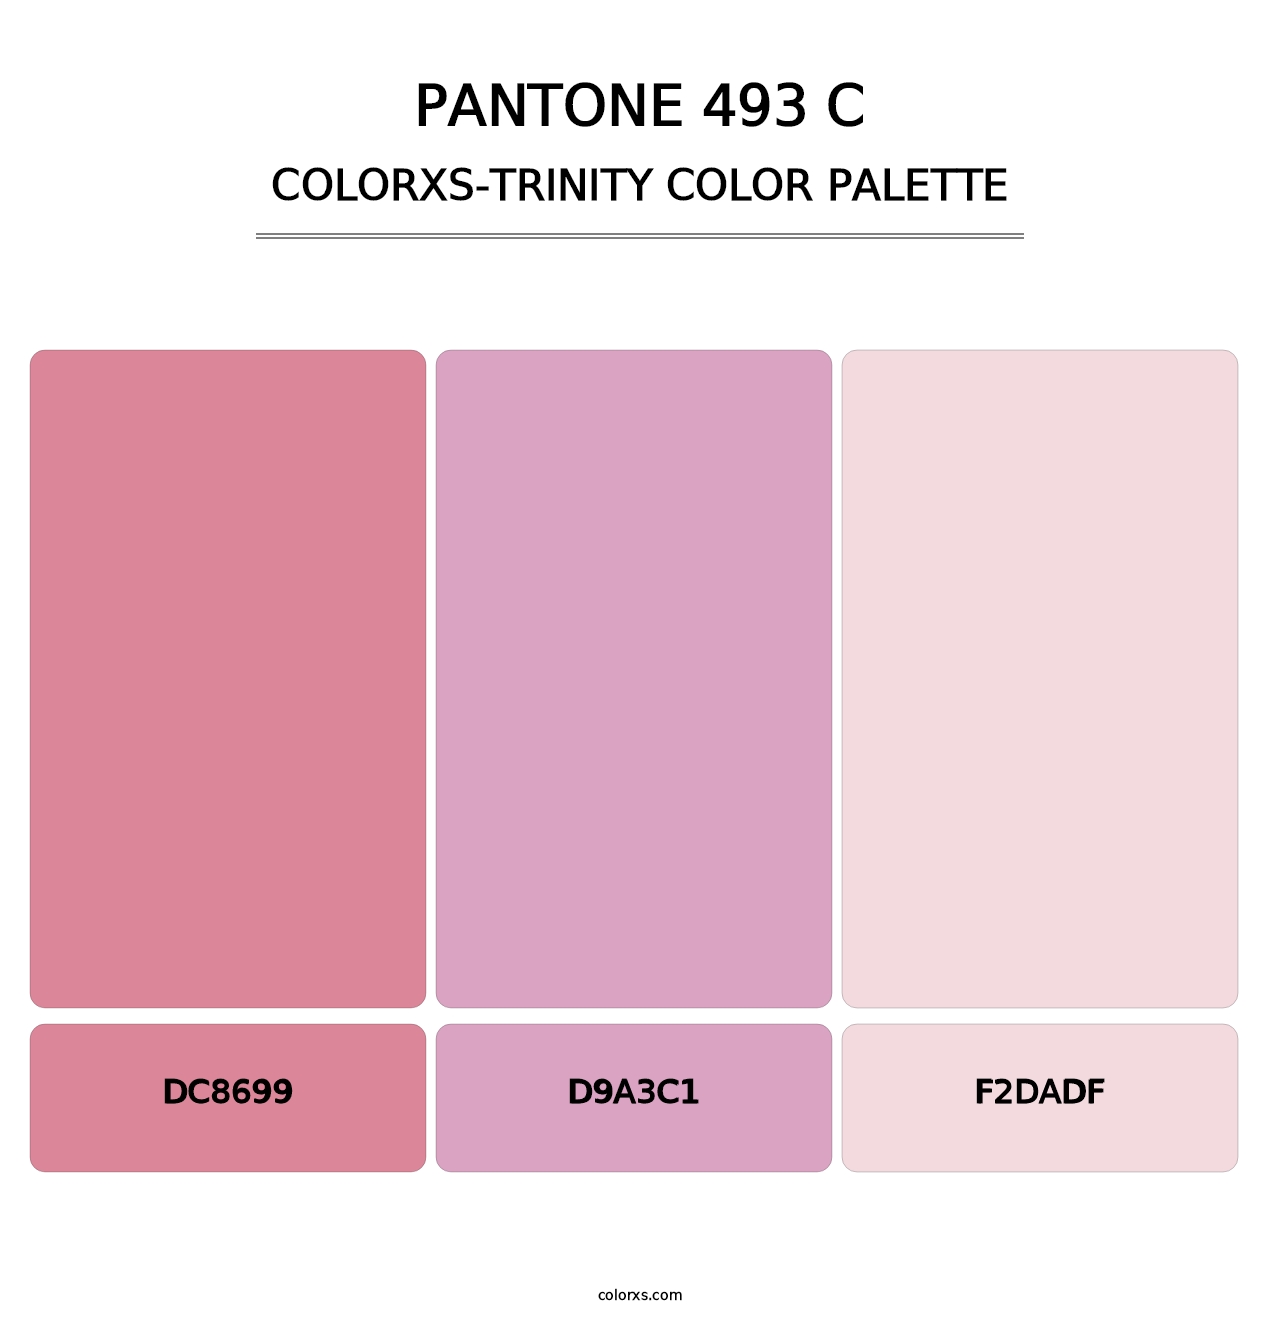 PANTONE 493 C - Colorxs Trinity Palette